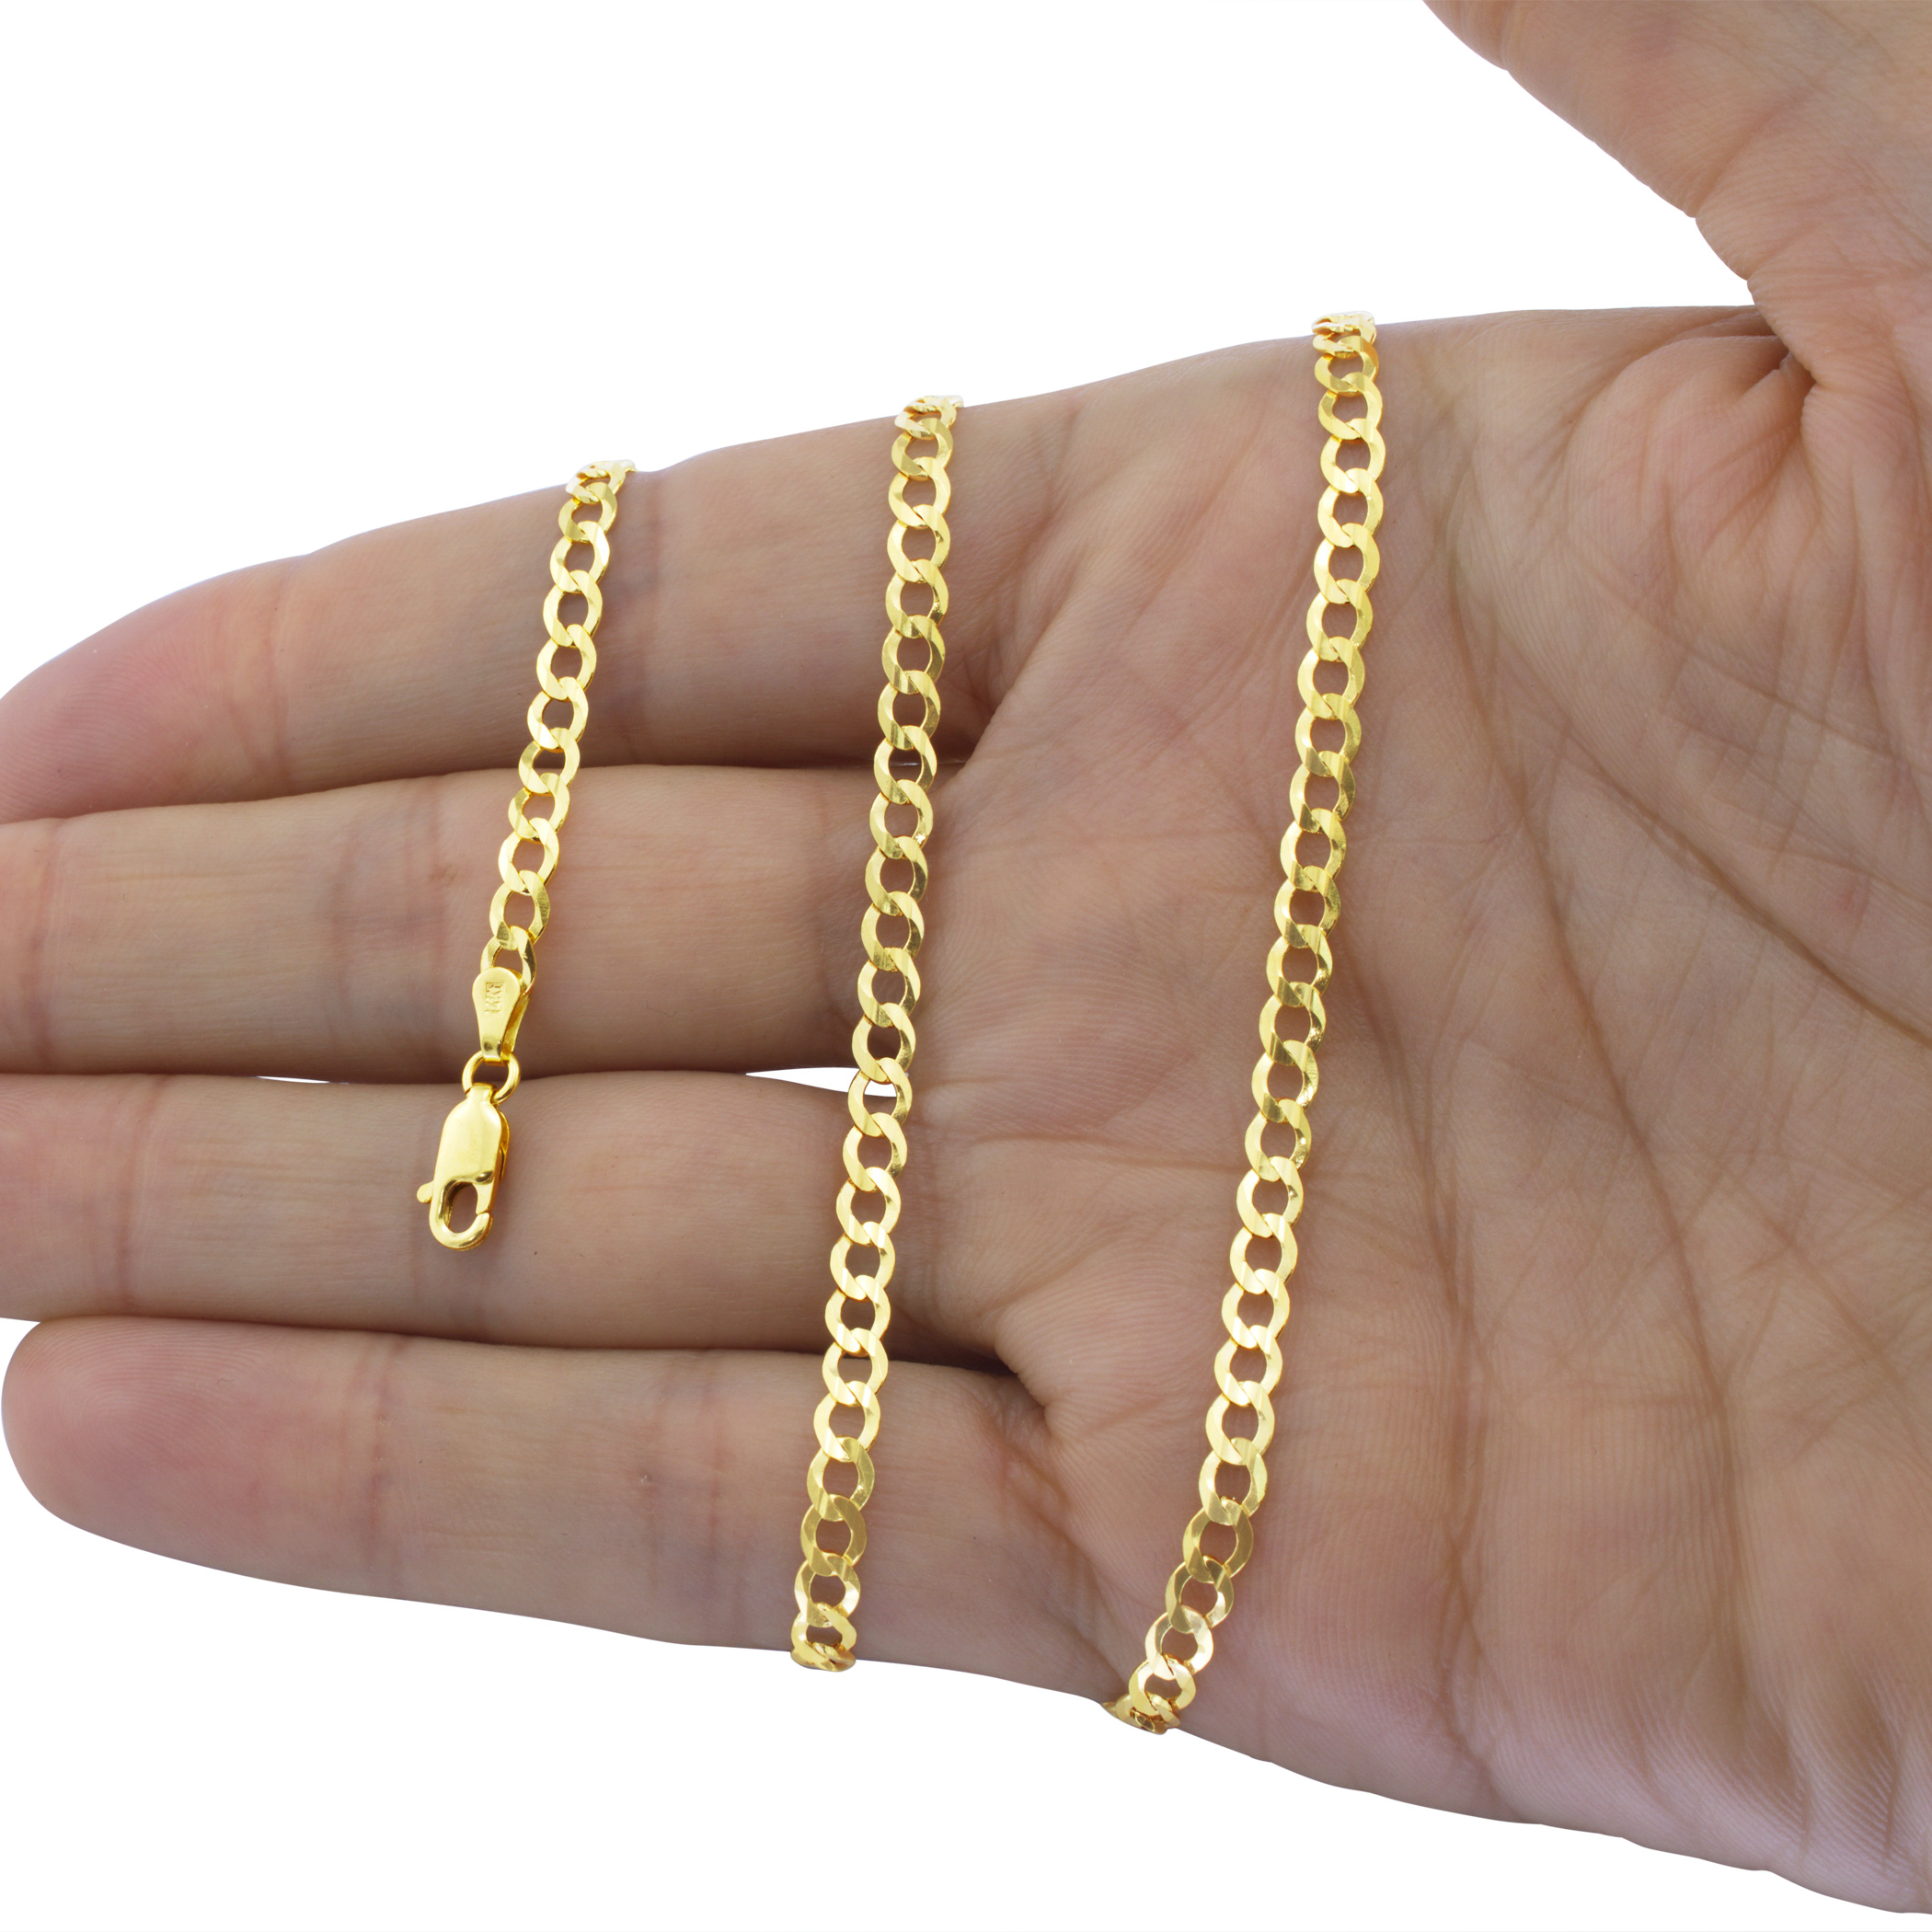 14k Gold Lock Necklace – Leandra Hill